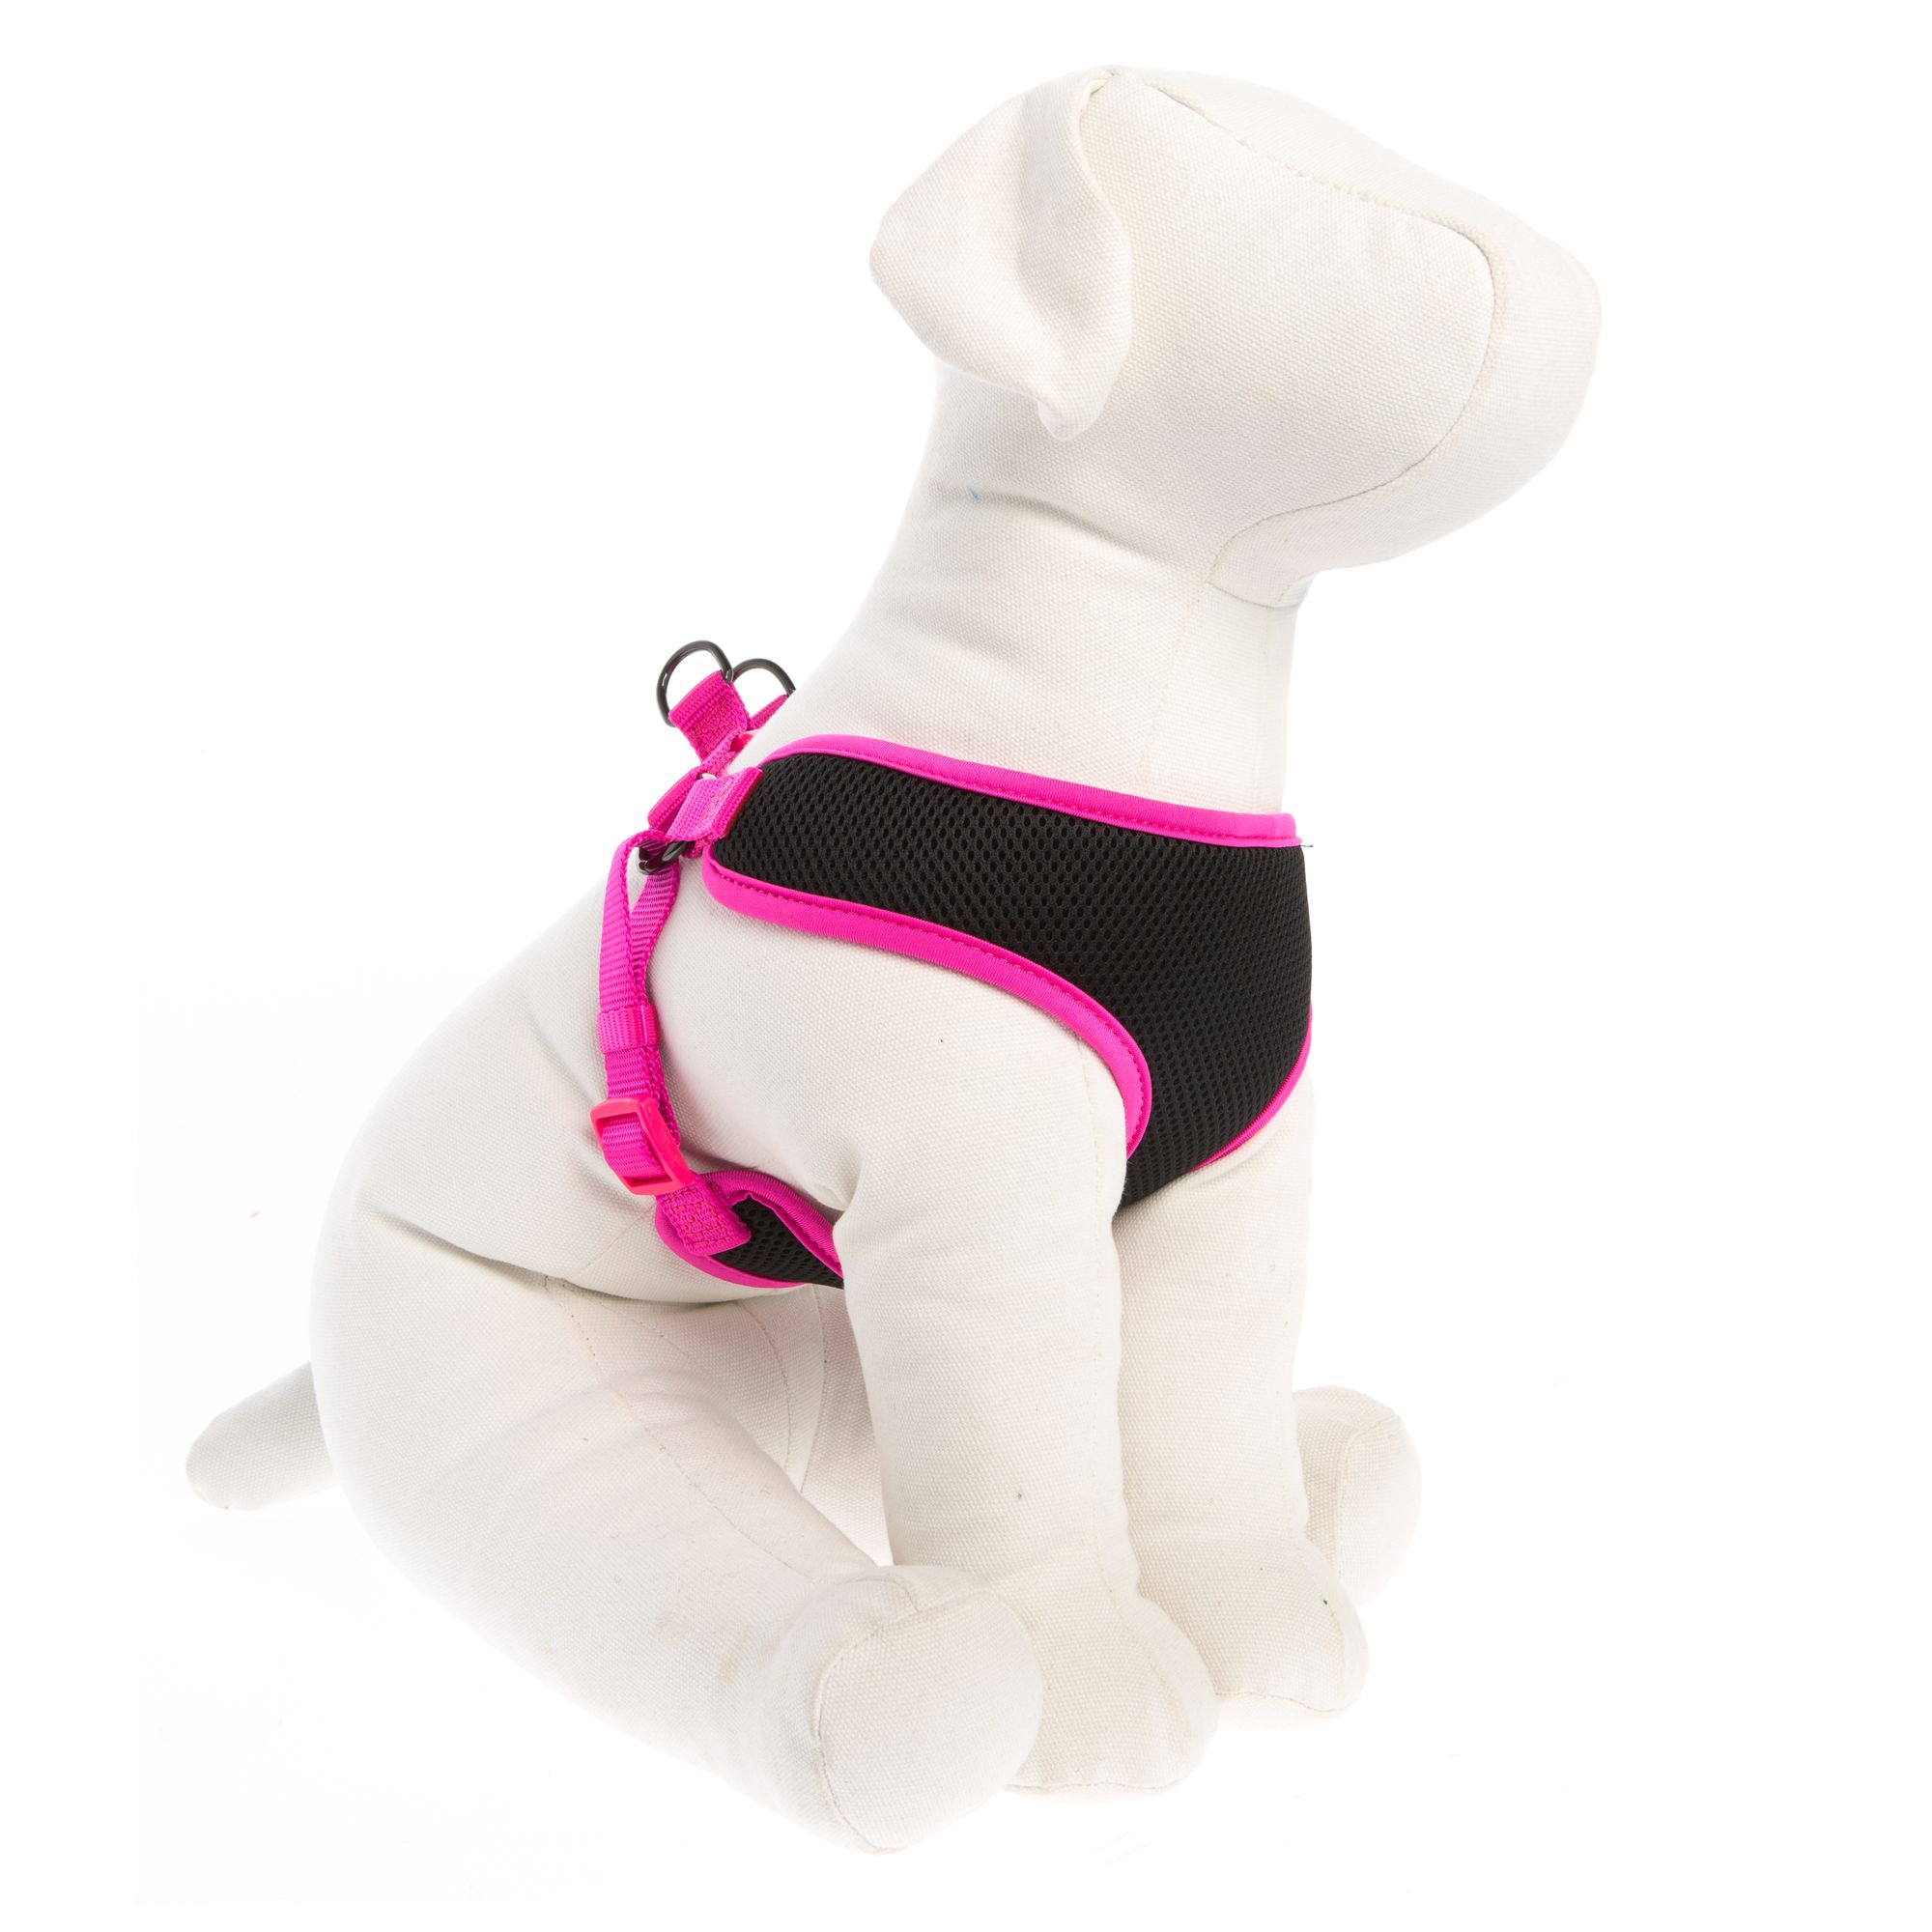 petsmart dog harness